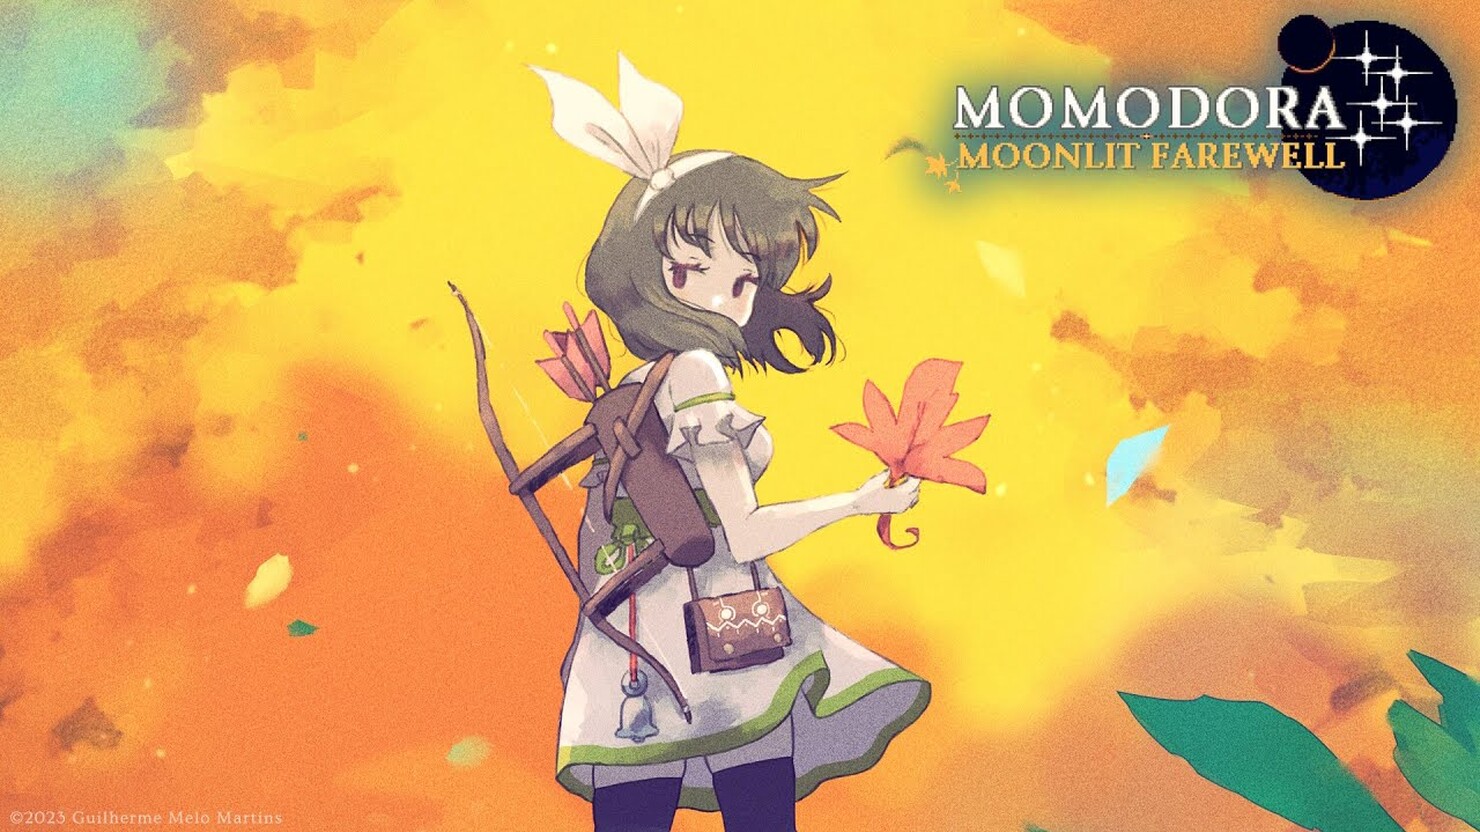 Momodora: Moonlit Farewell #3 (Черная кошка-злыдня)